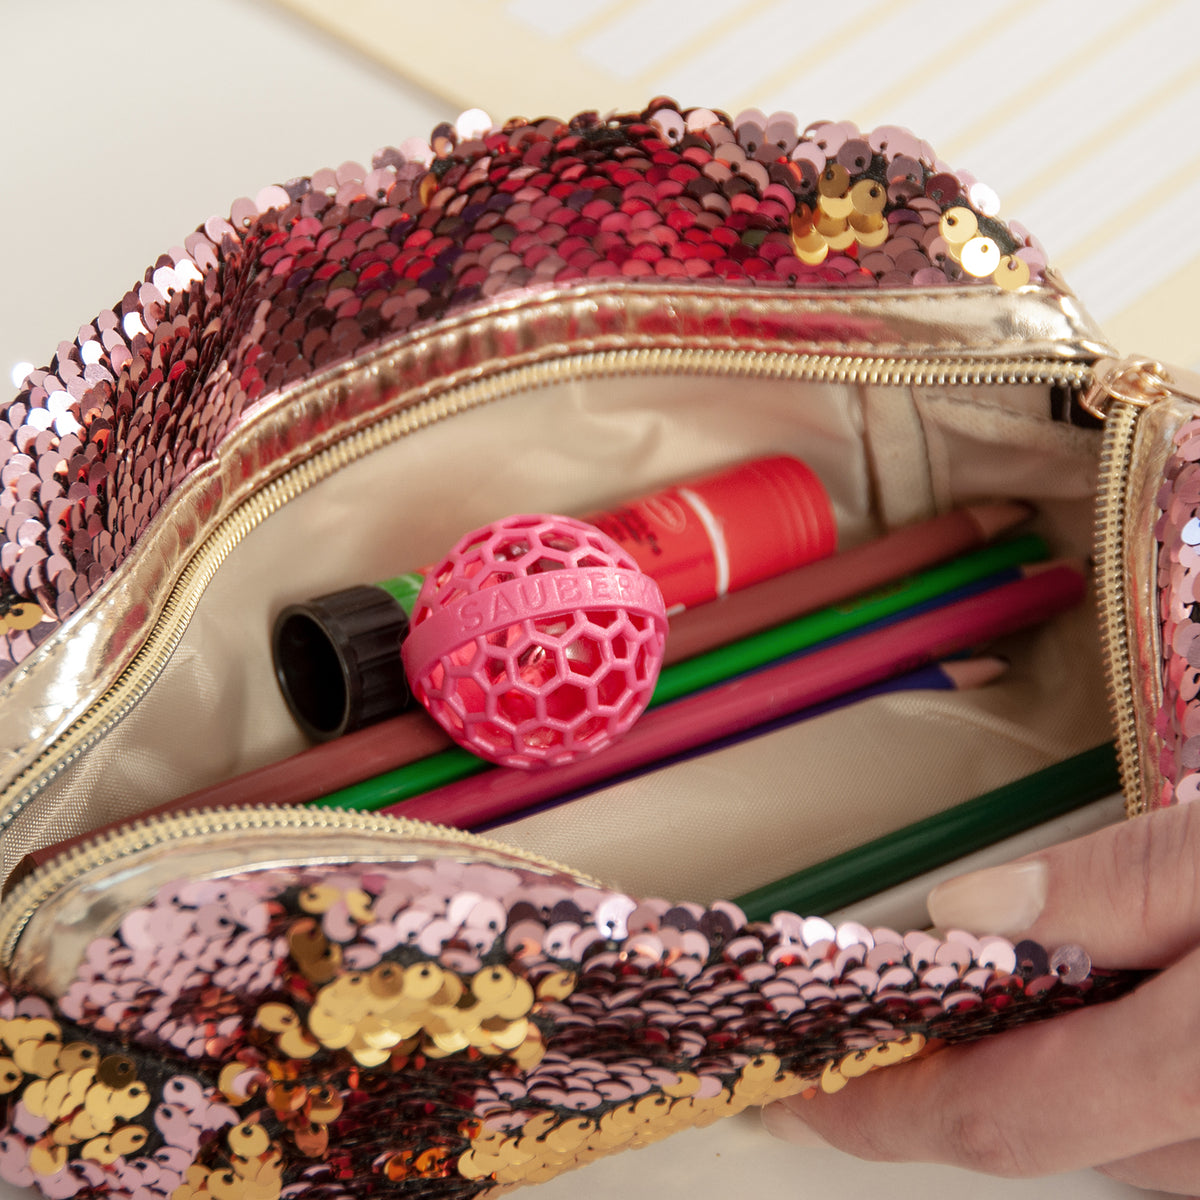 1pcs Purse Handbag Cleaning Balls With 2 Cord Organizers, Reusable